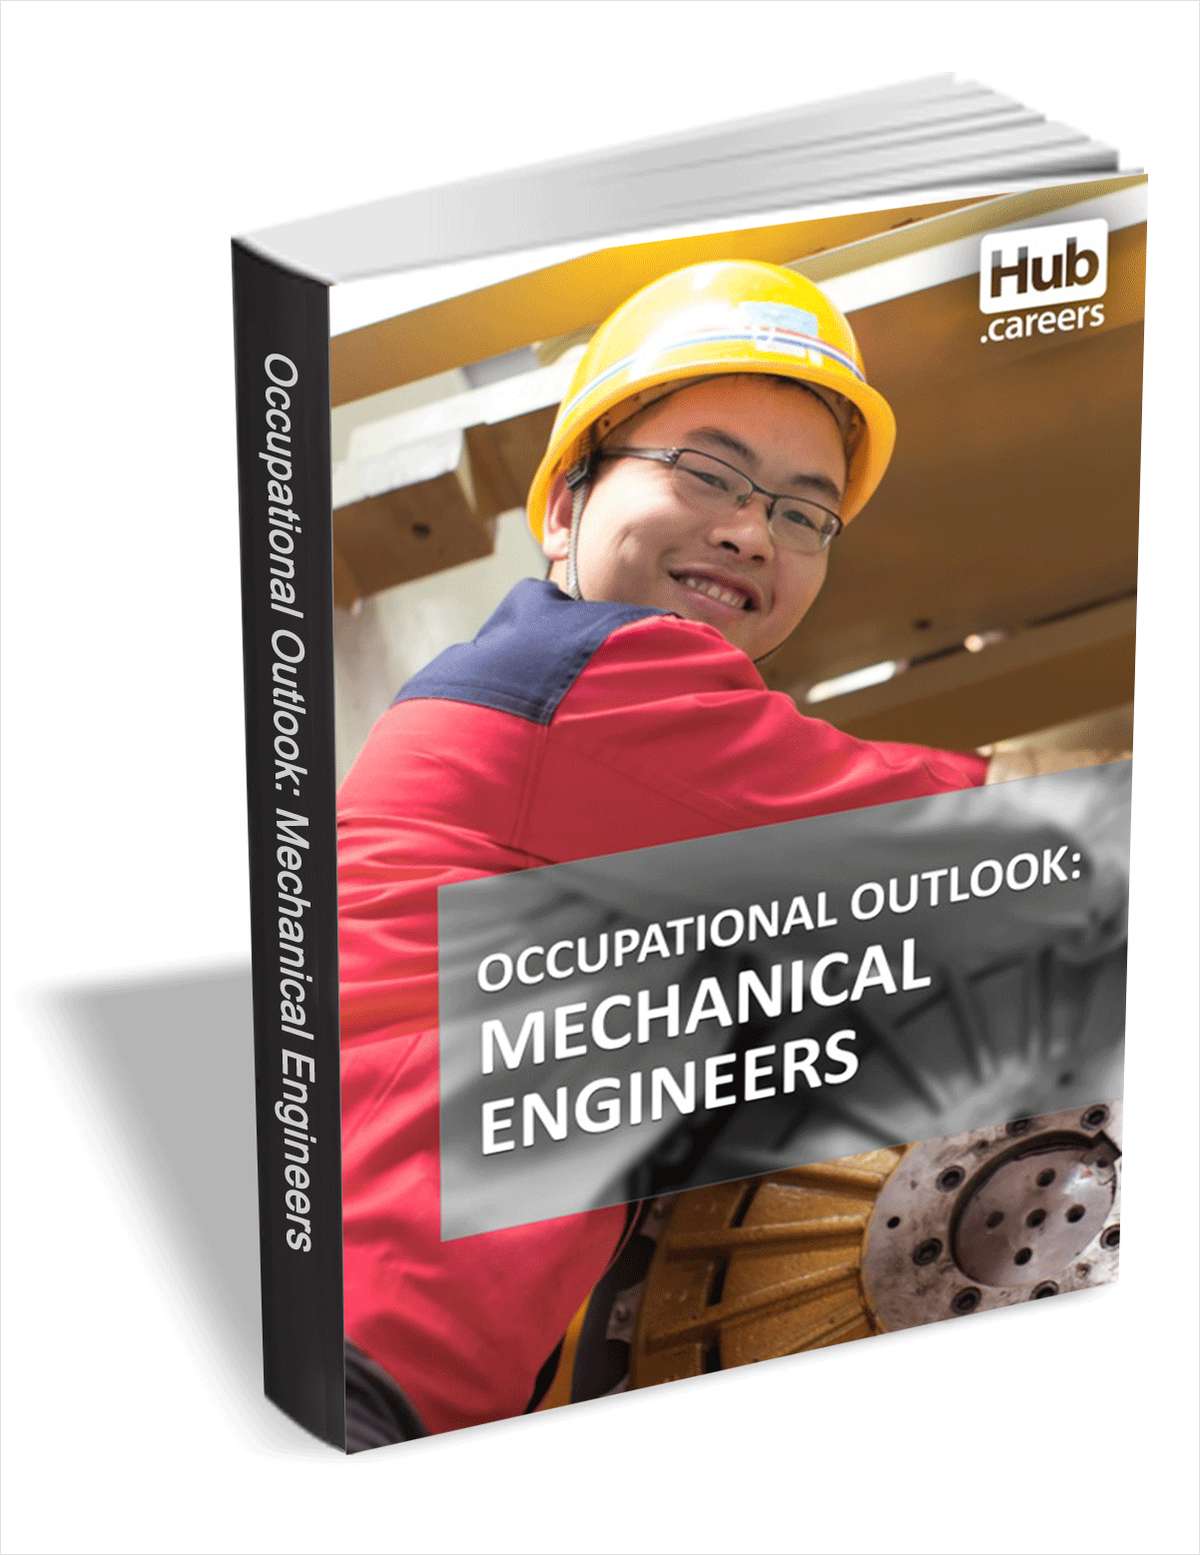 Mechanical Engineers - Occupational Outlook